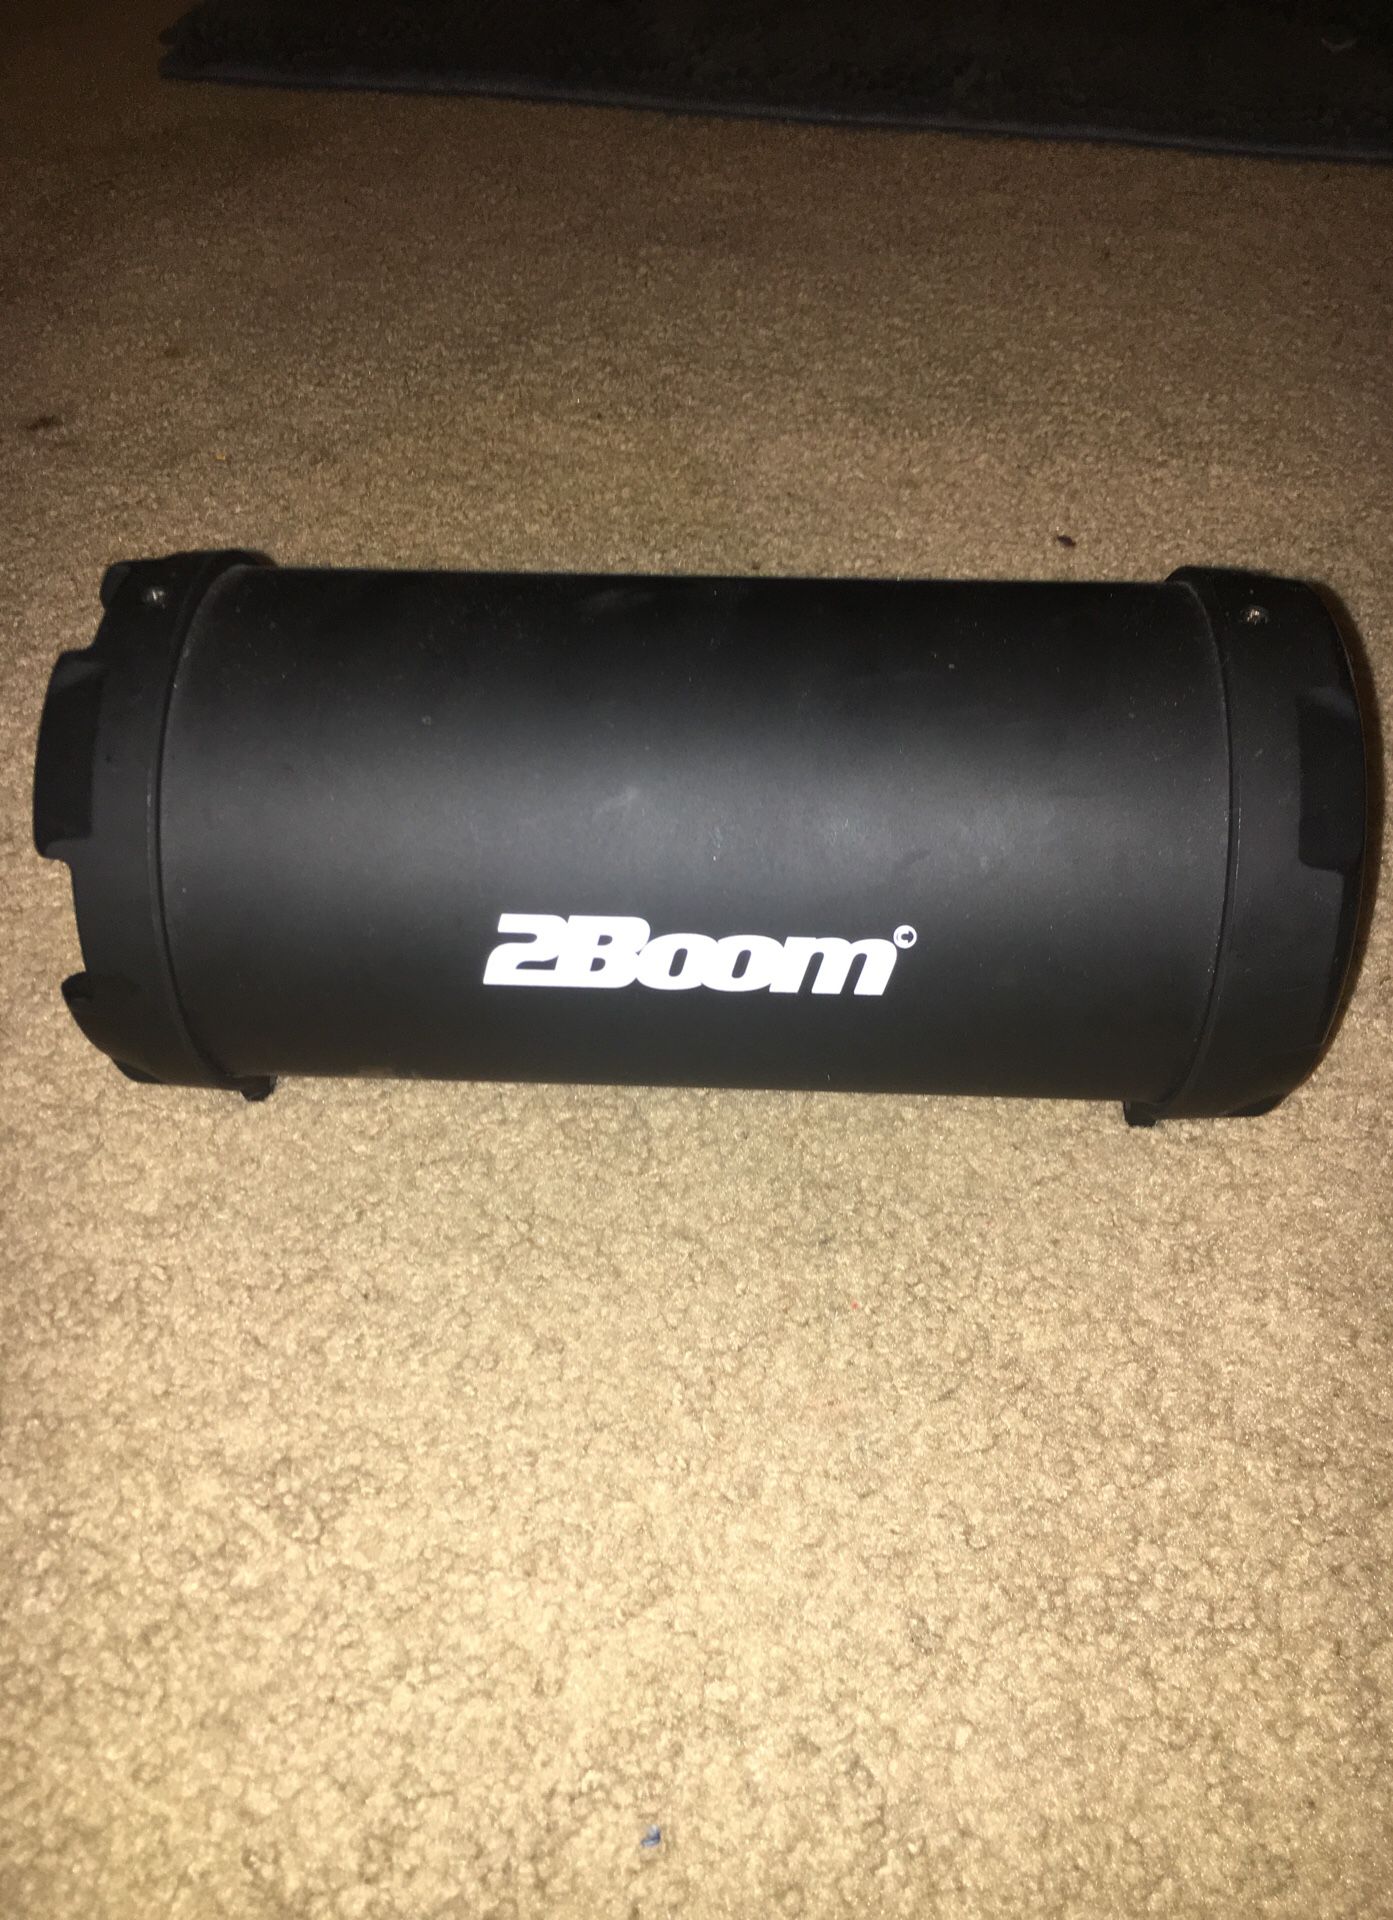 2boom Bluetooth speaker